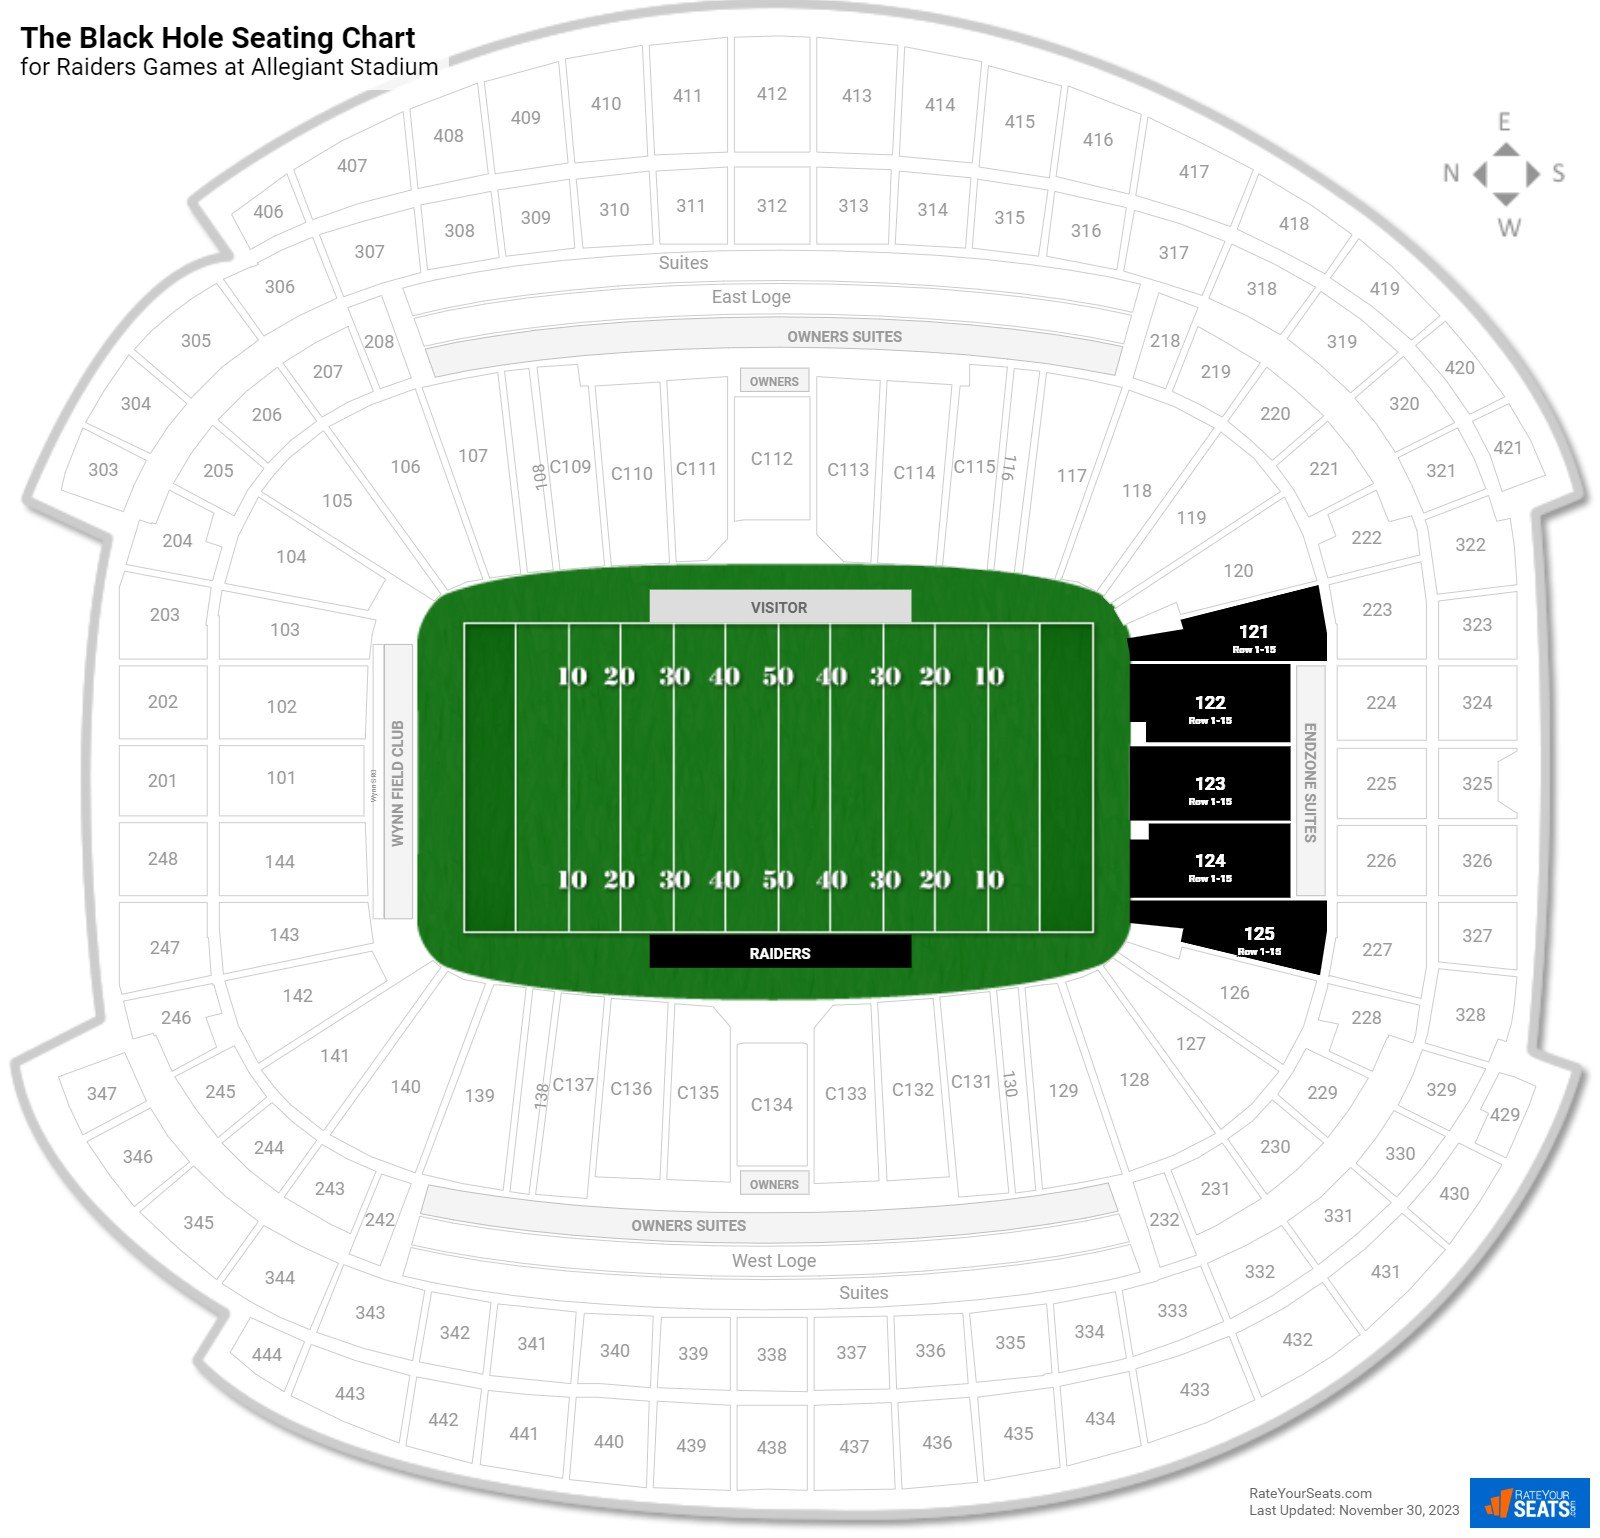 Raiders The Black Hole Seating Chart at Allegiant Stadium